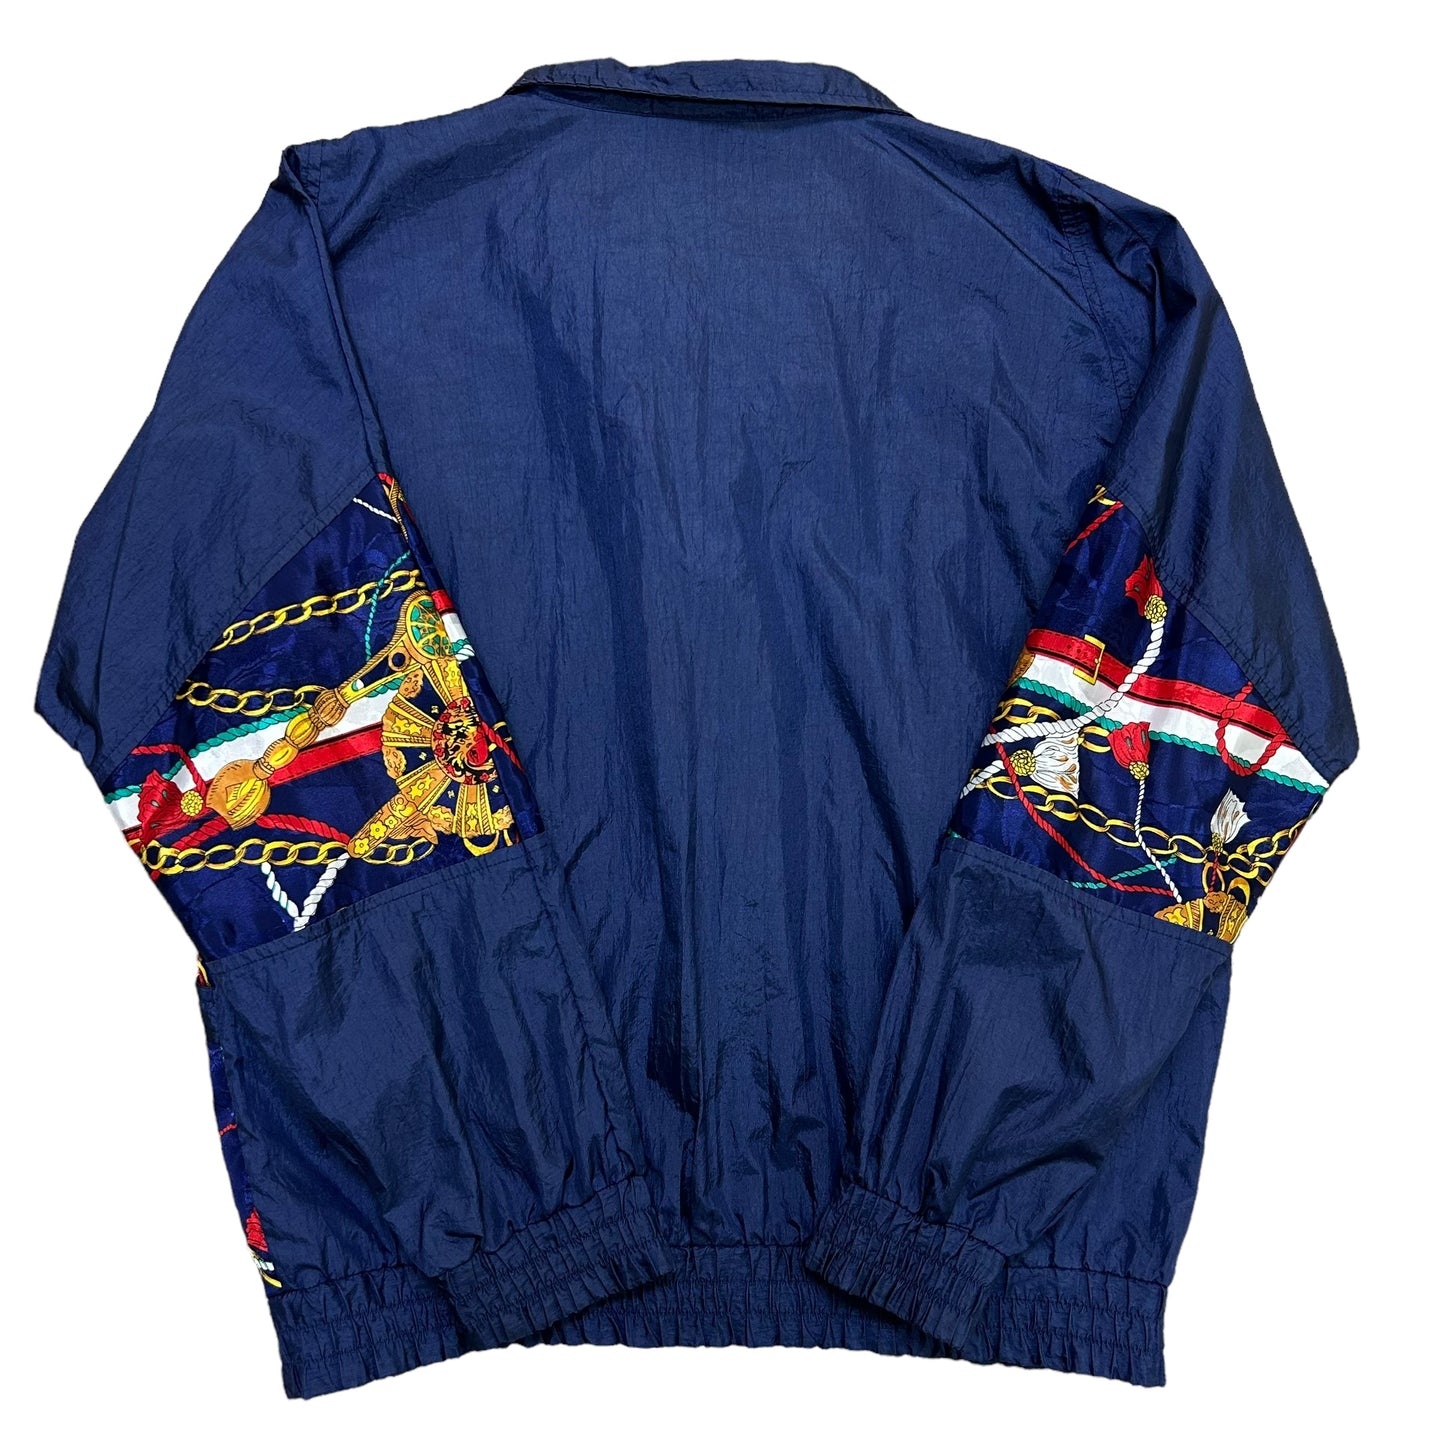 Vintage 1990s Westside Connection Navy Blue Windbreaker Jacket - Size Medium